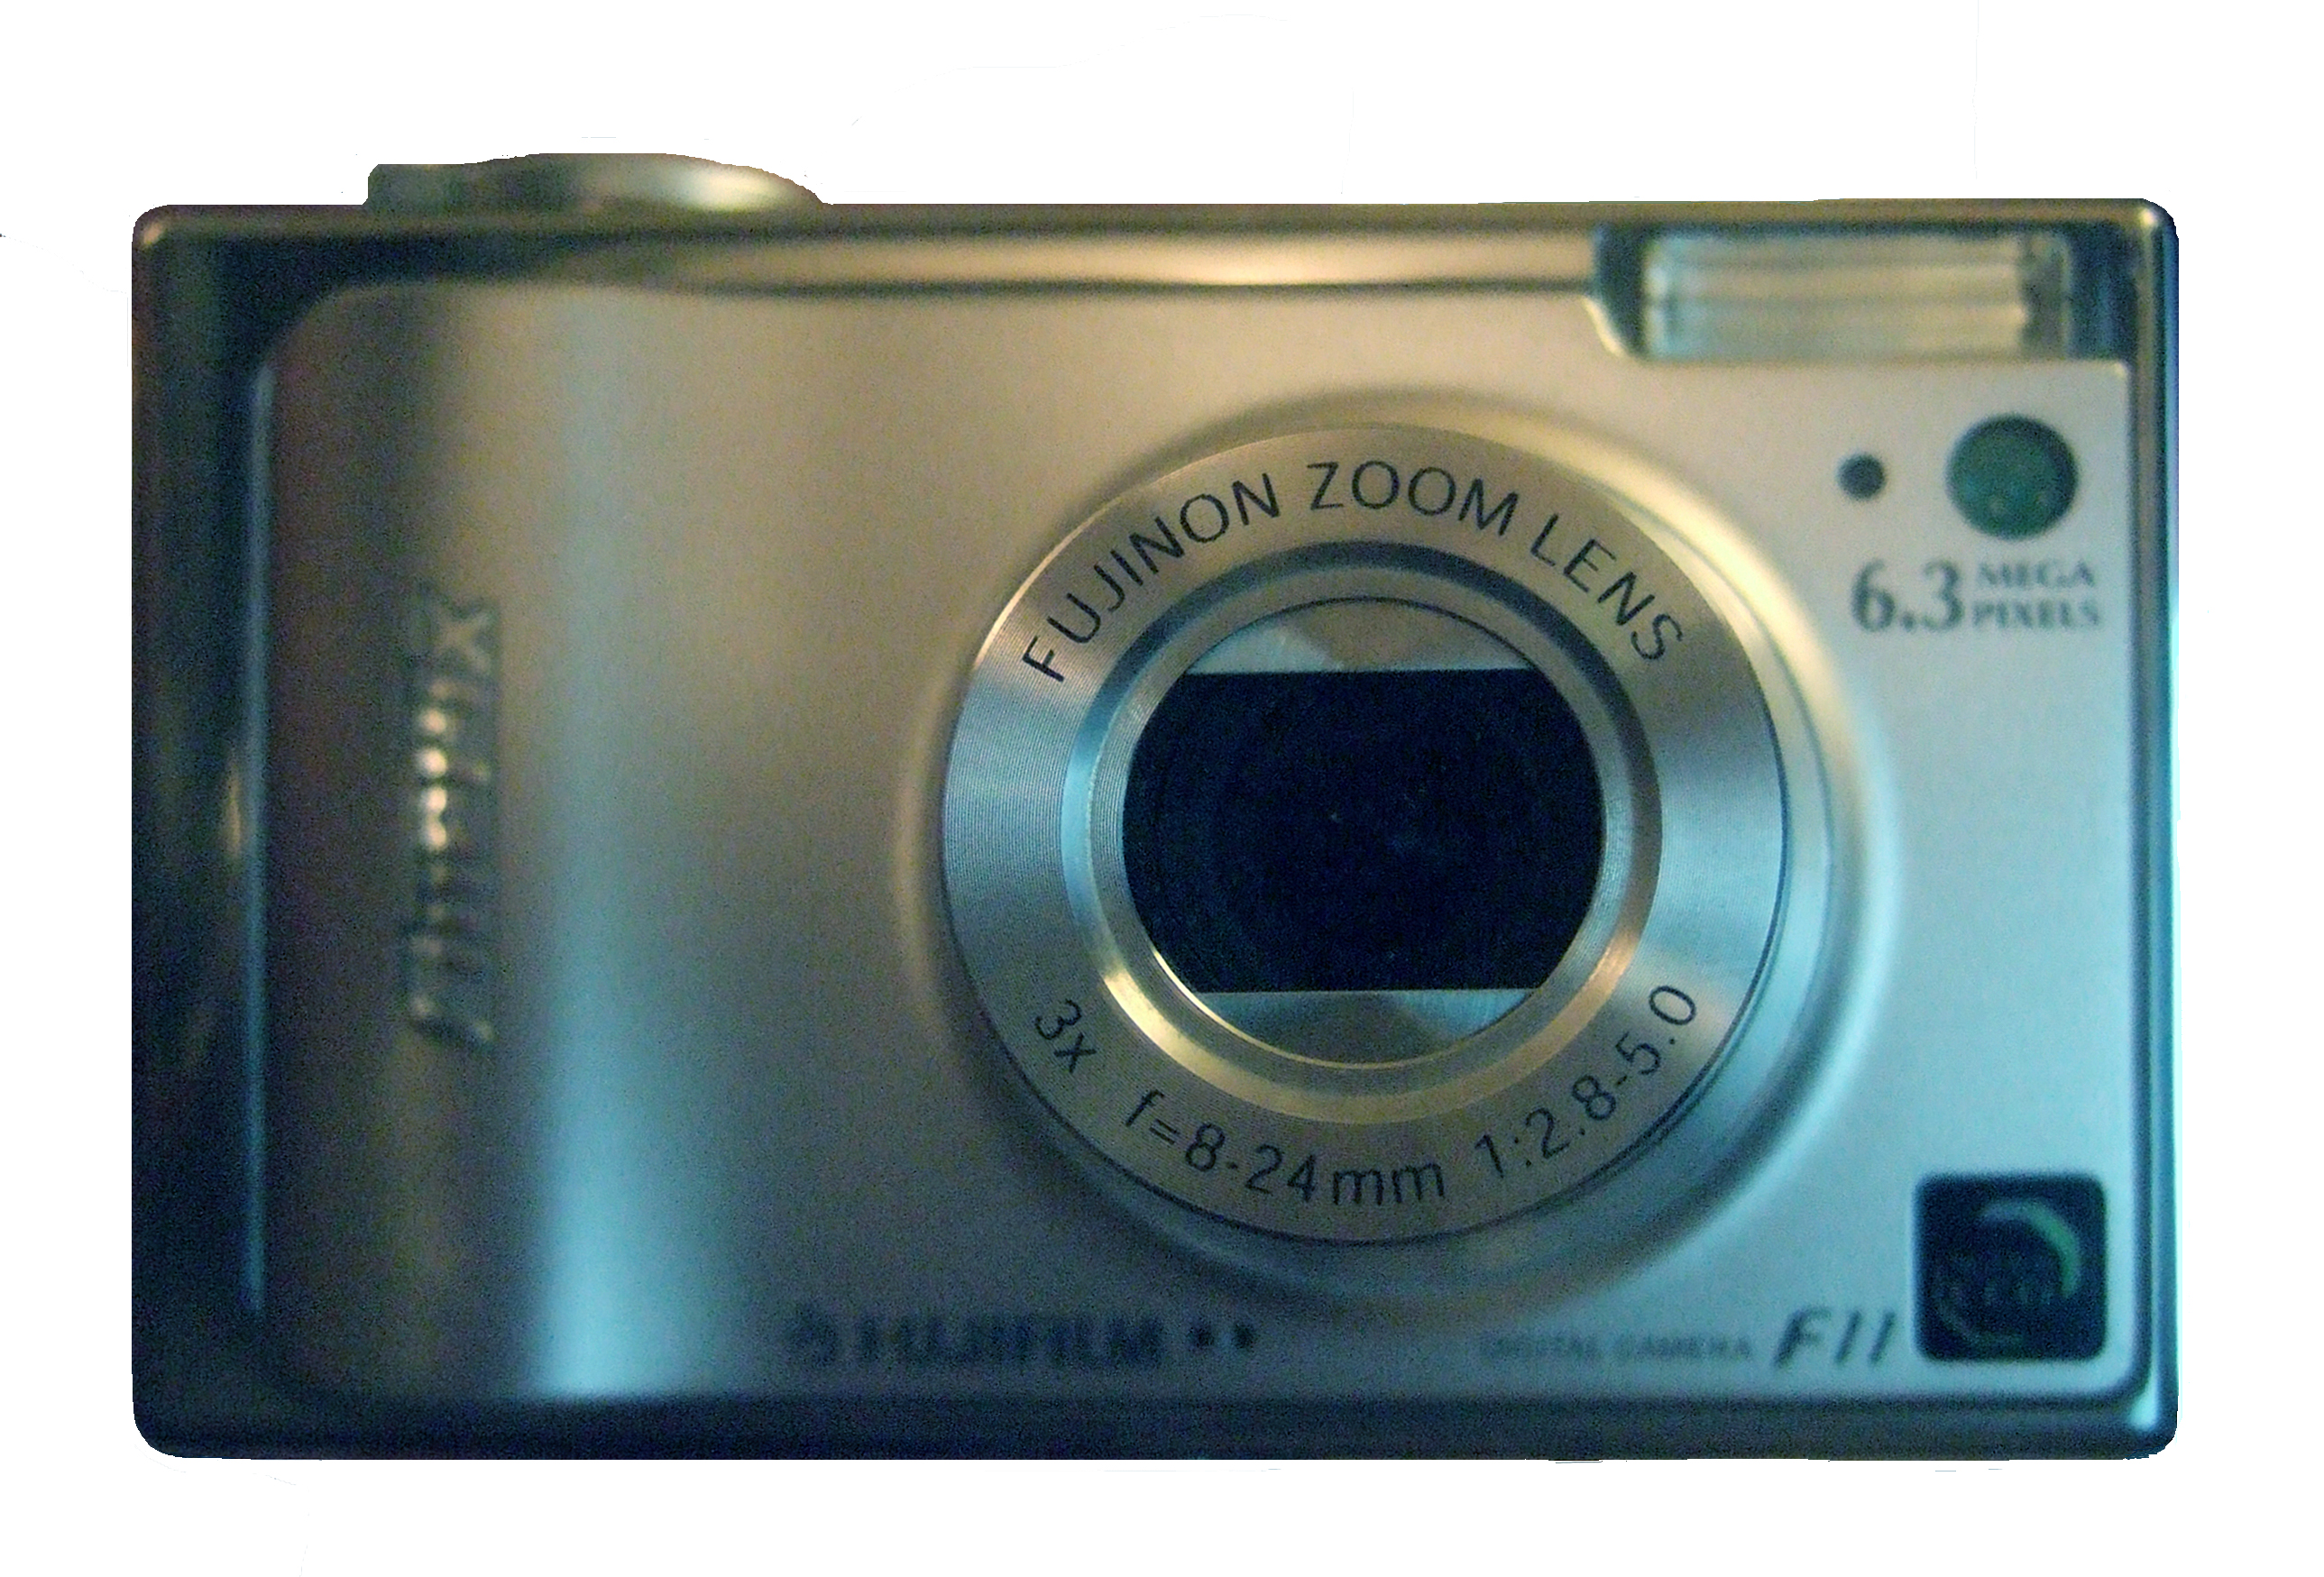 File:Fujifilm Finepix F11, -Aug. 2006 a.jpg - Wikimedia Commons